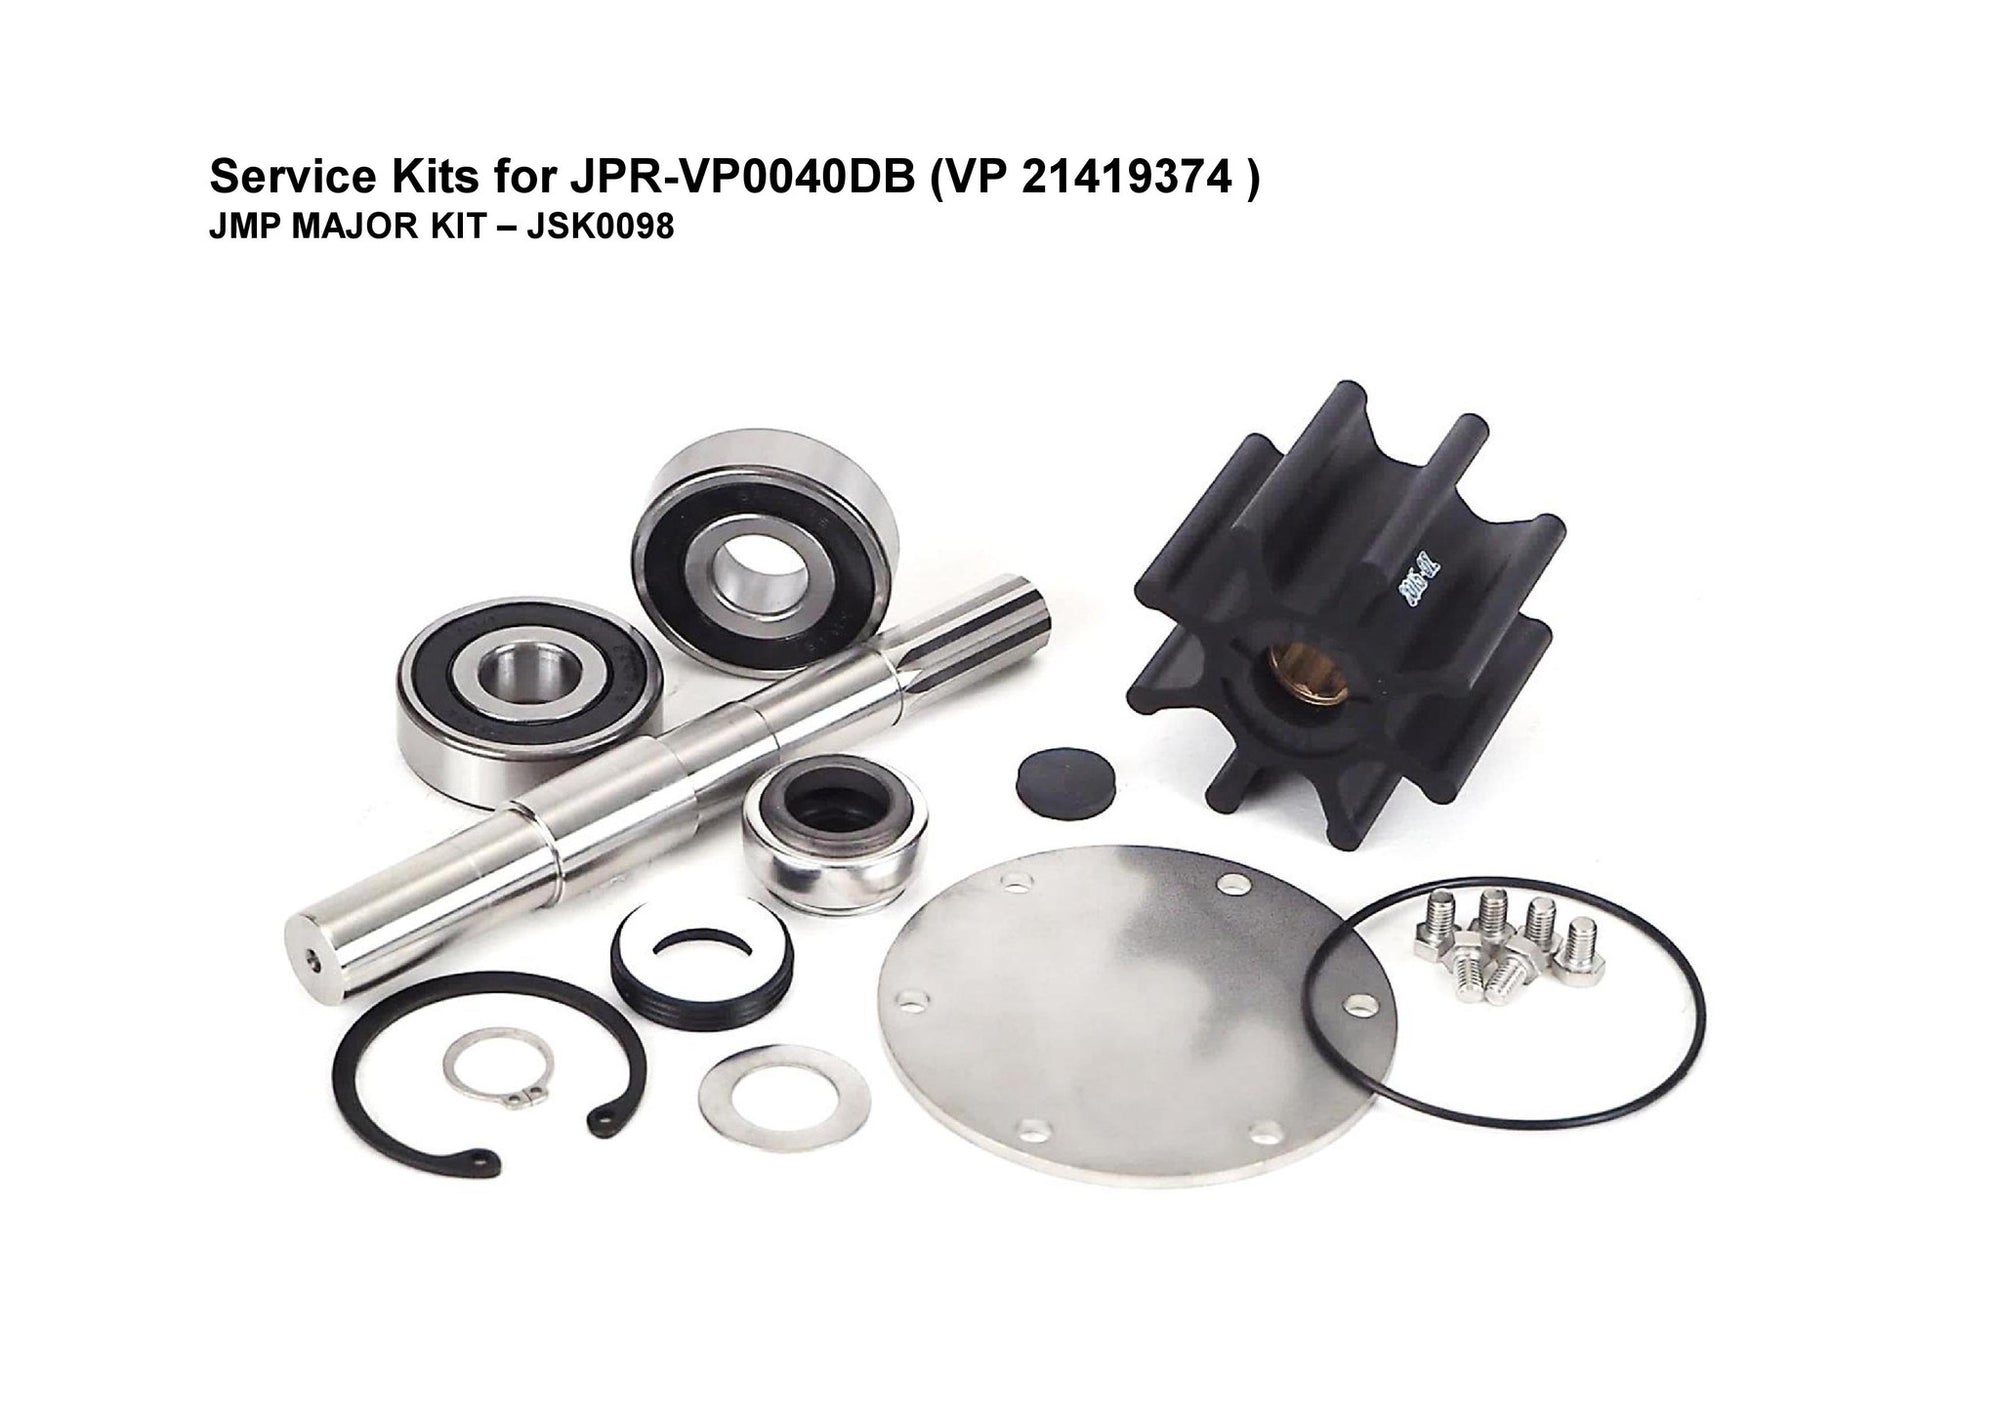 JMP-JSK0098 MAJOR KIT FOR JMP PUMP JPR-VP0040DB-21419374 (Fits Volvo Penta Engines: D4-225A-E, D4-260A-E, D4-260D-E, D4-300A-E, D4-300D-E)